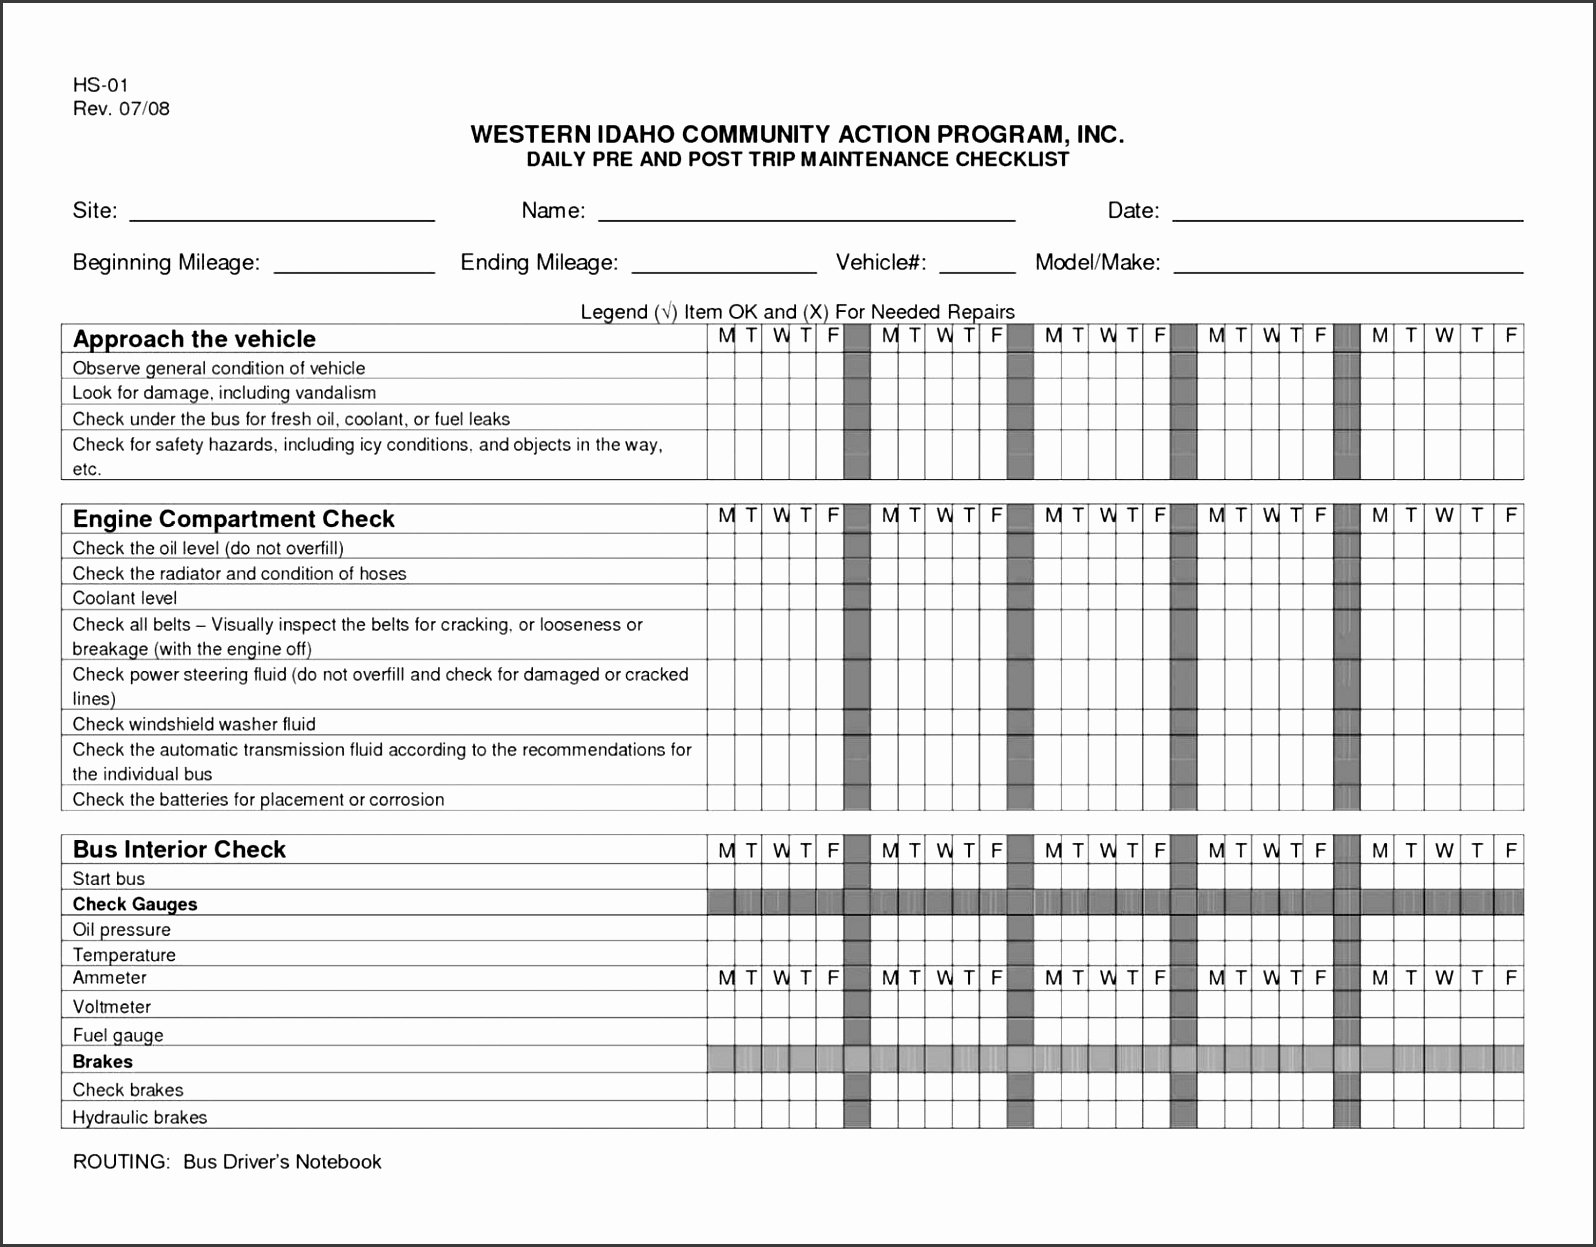 facility maintenance checklist template